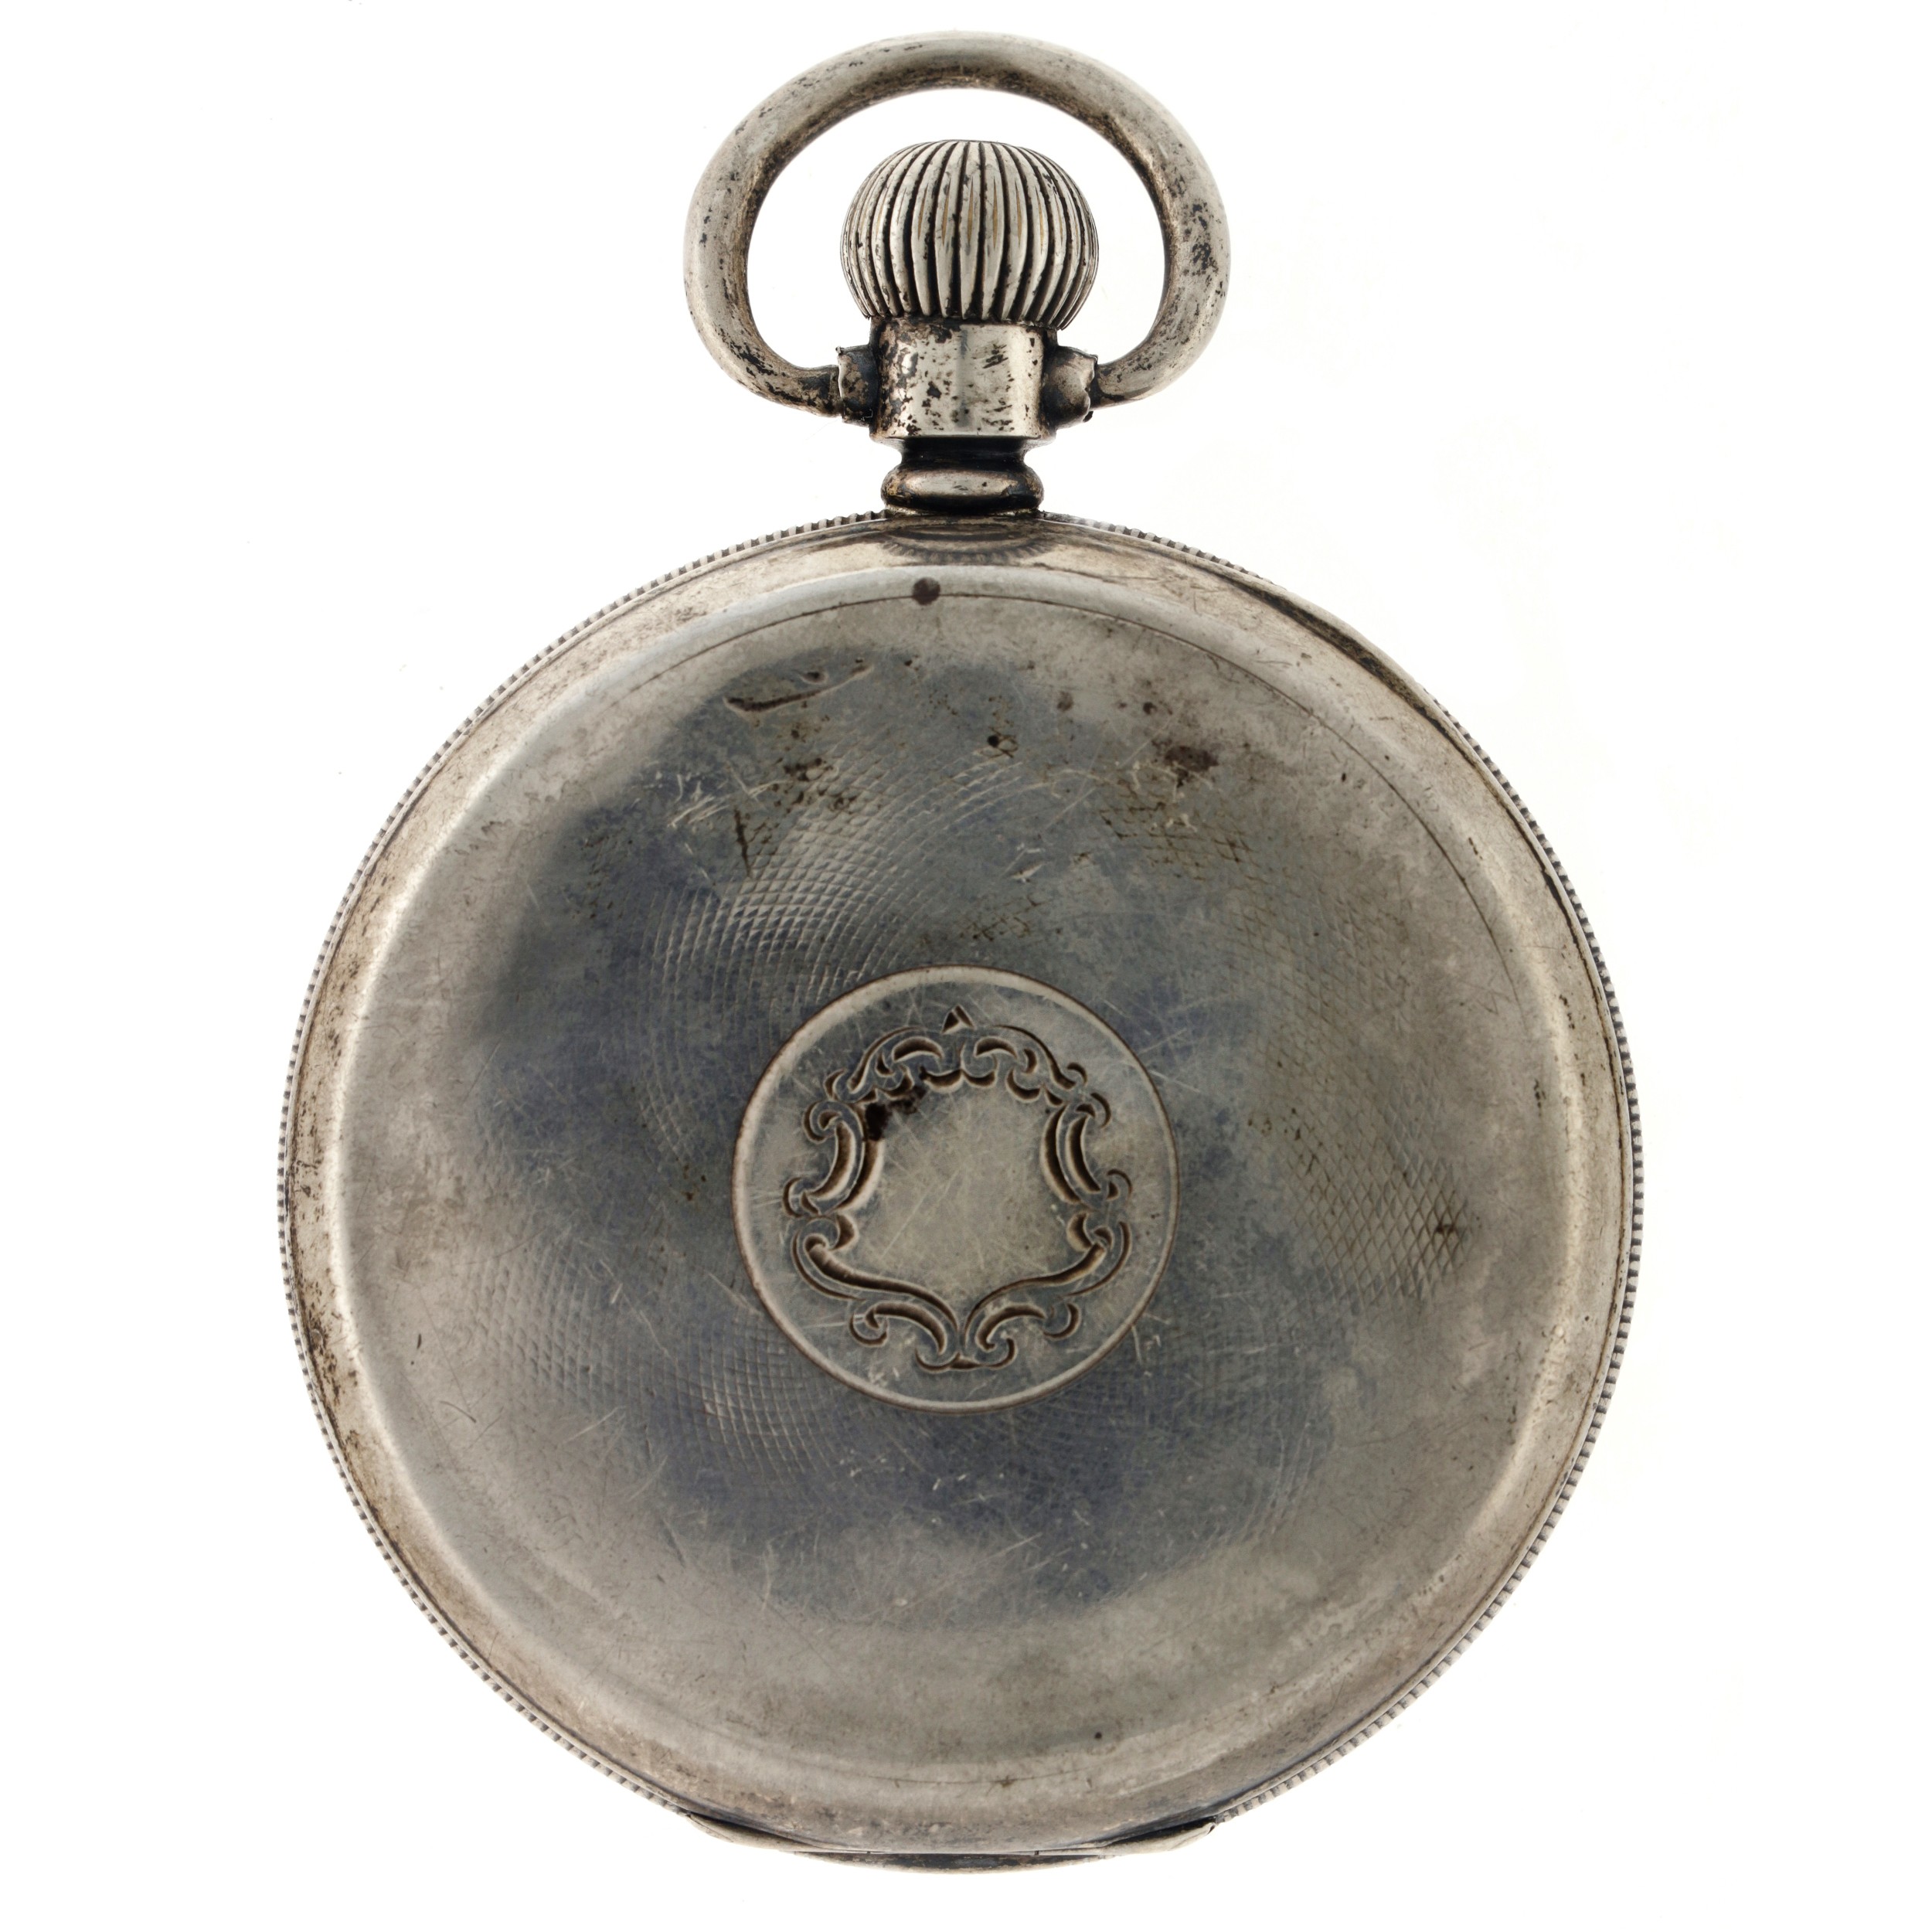 No Reserve - Waltham U.S.A. silver pocketwatch (925/1000) - Men's pocketwatch - approx. 1918. - Image 5 of 7